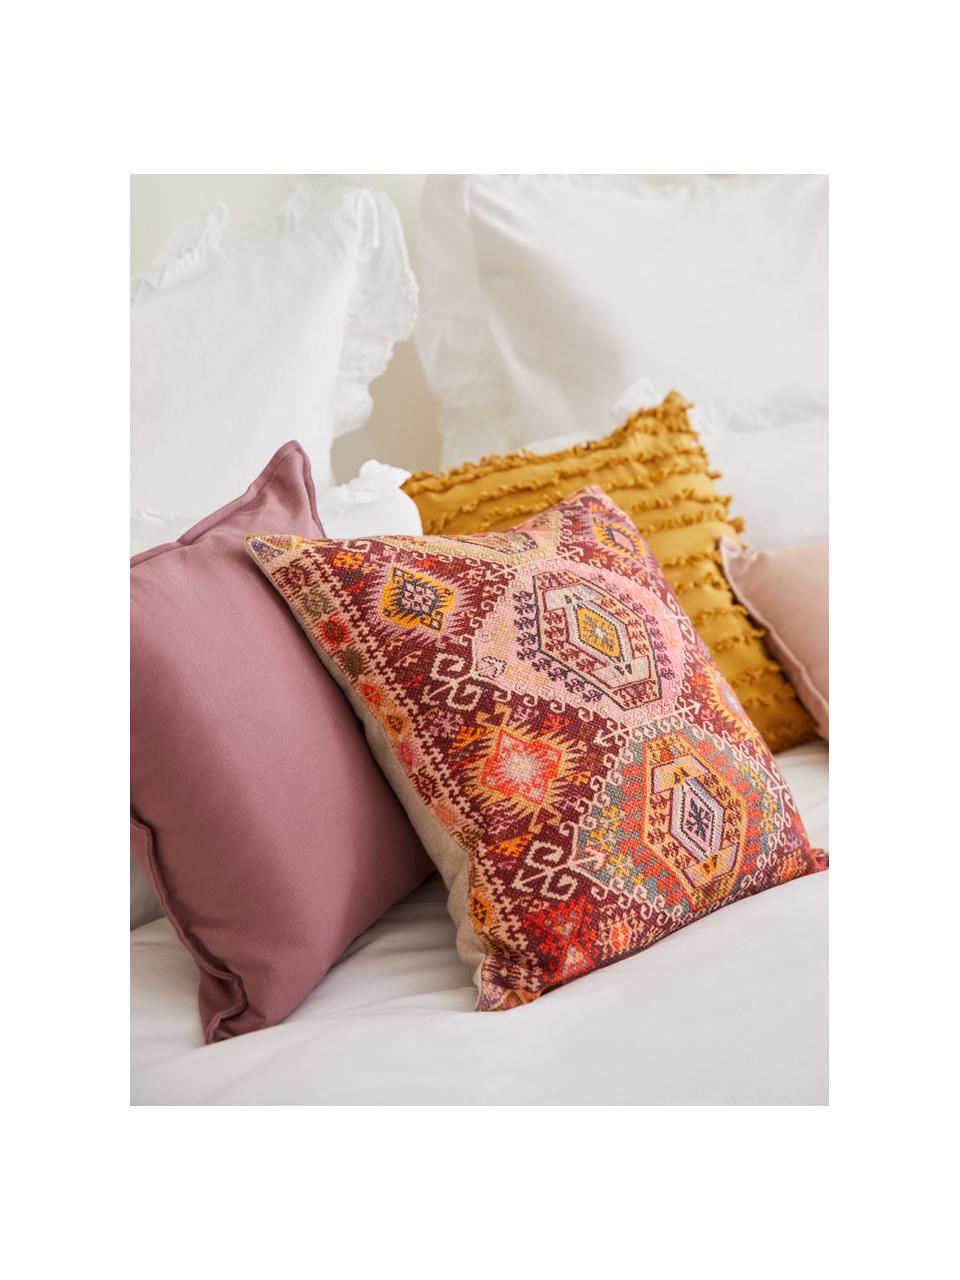 Katoenen kussenhoes Tarso in ethno stijl, Katoen, Rood, roze, oranje, beige, B 45 x L 45 cm